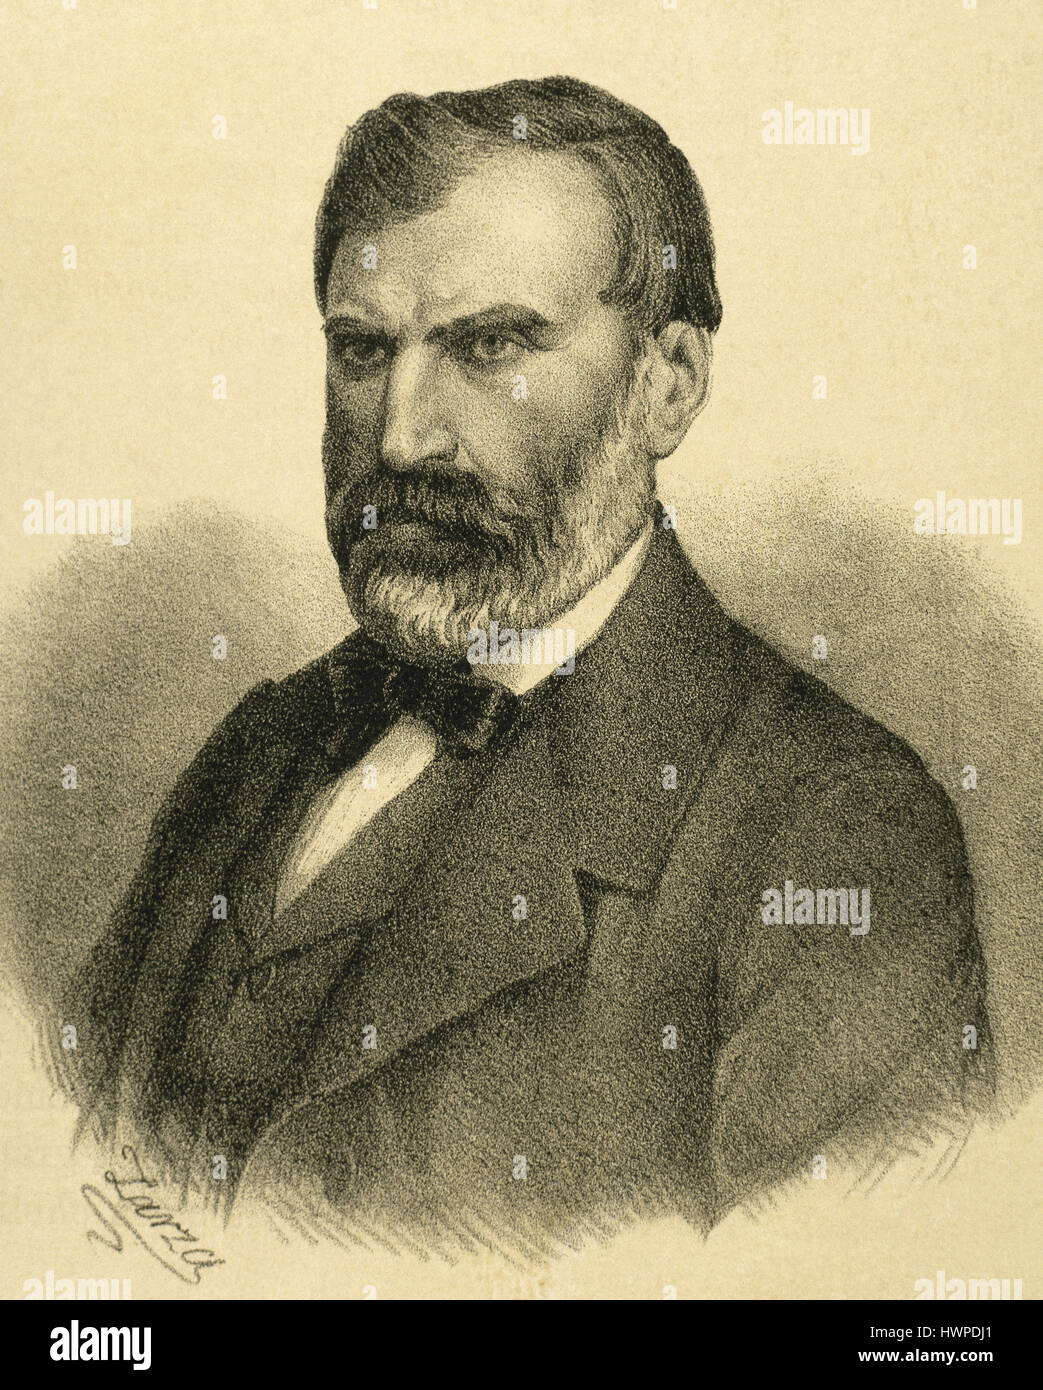 Eugene Pelletan (1813-1884). French writer, journalist and politician. Portrait. Engraving by Eusebio Zarza (1842-1881). 'Galeria Universal', 1868. Stock Photo